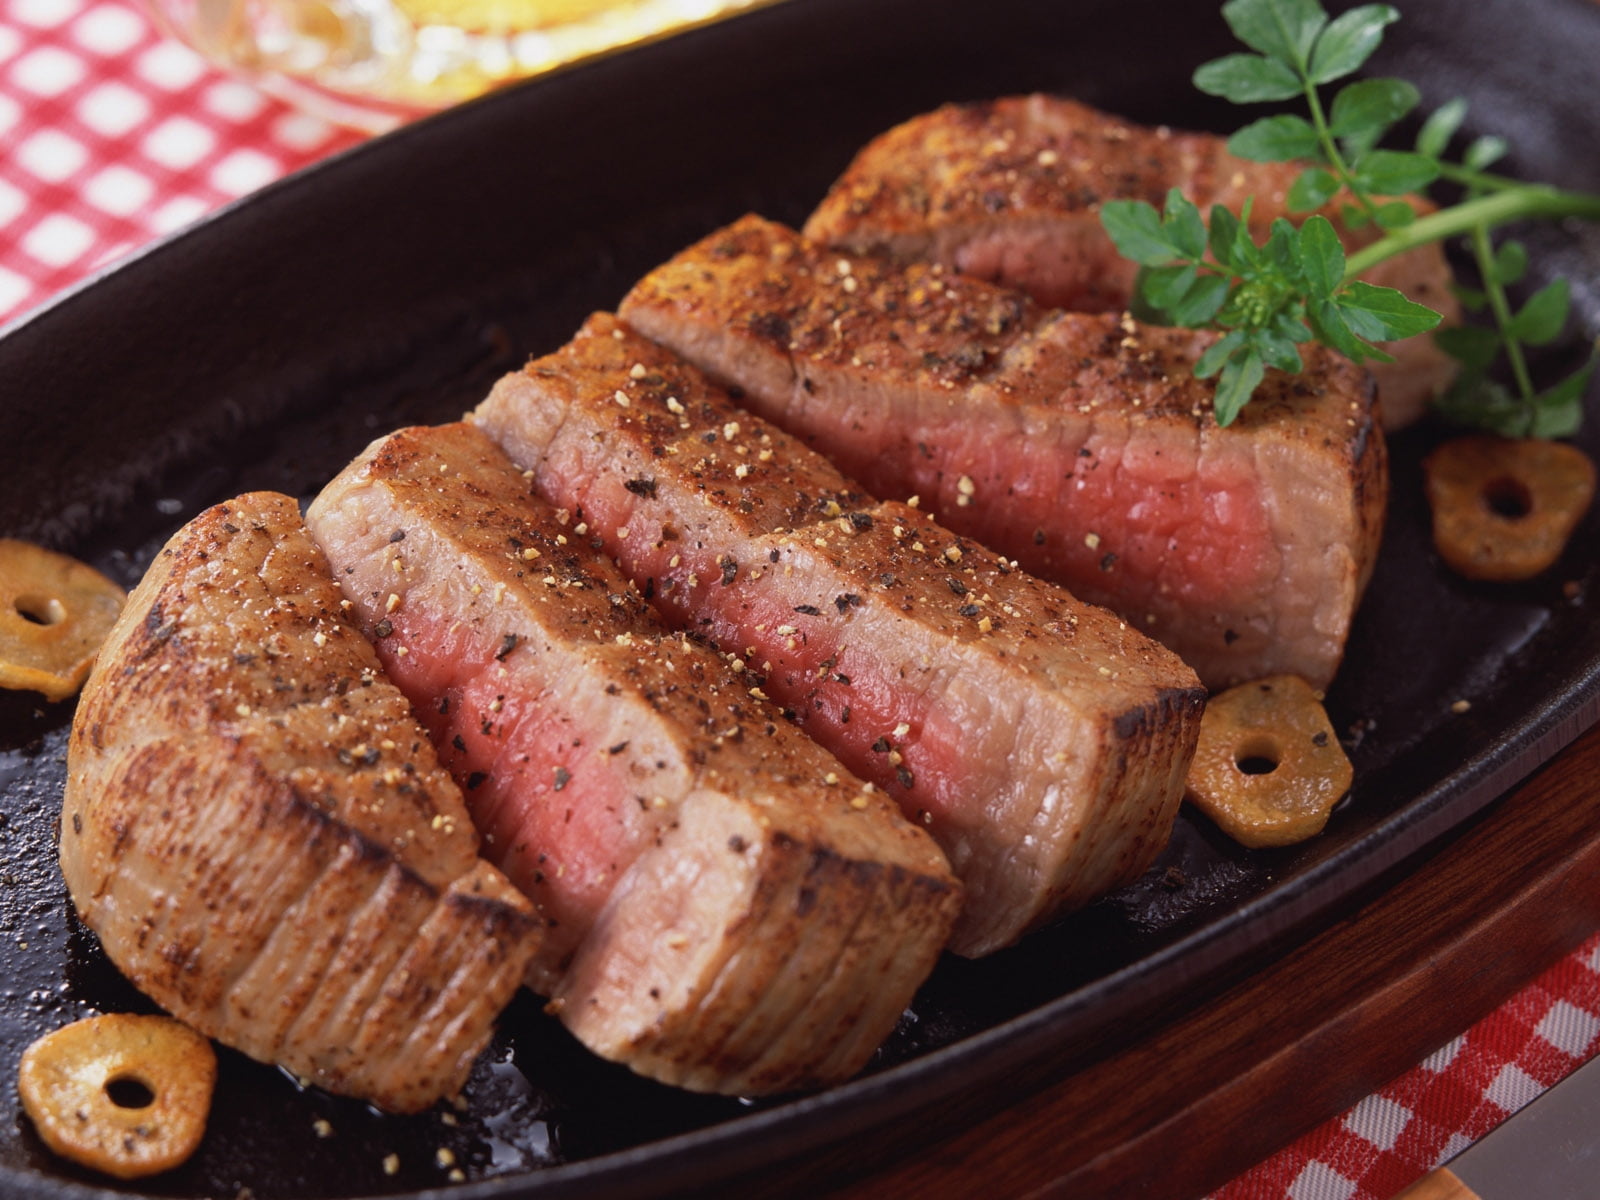 Mengenal Tingkat Kematangan Daging Steak